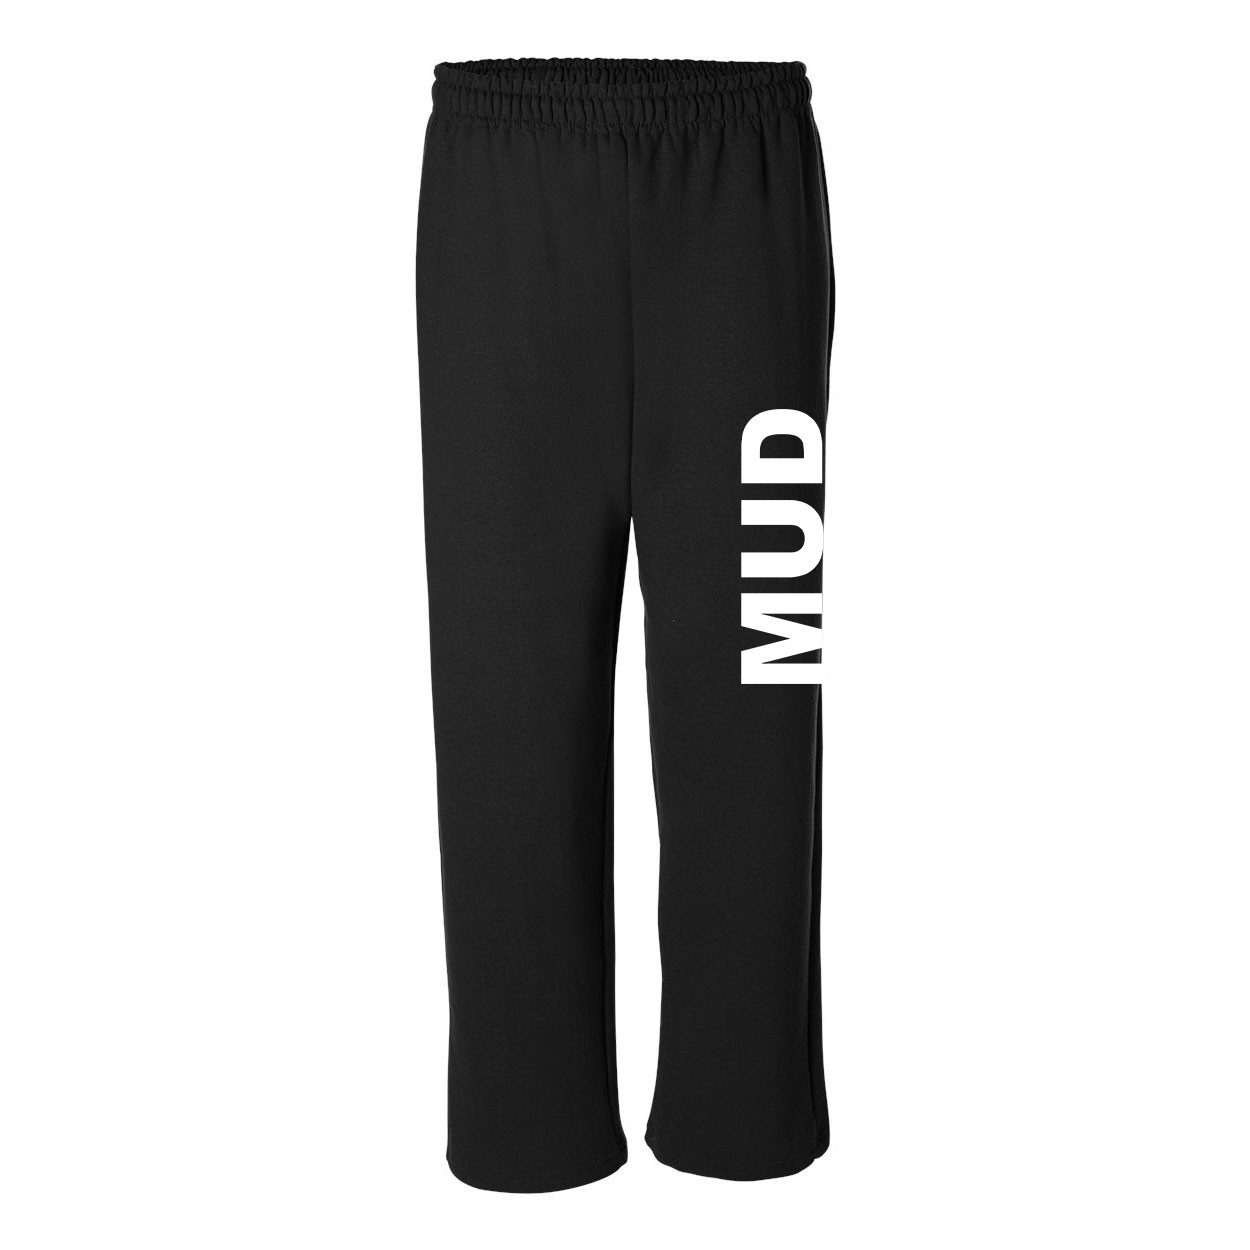 Mud Brand Logo Classic Men's Unisex Sweatpants Black (White Logo)